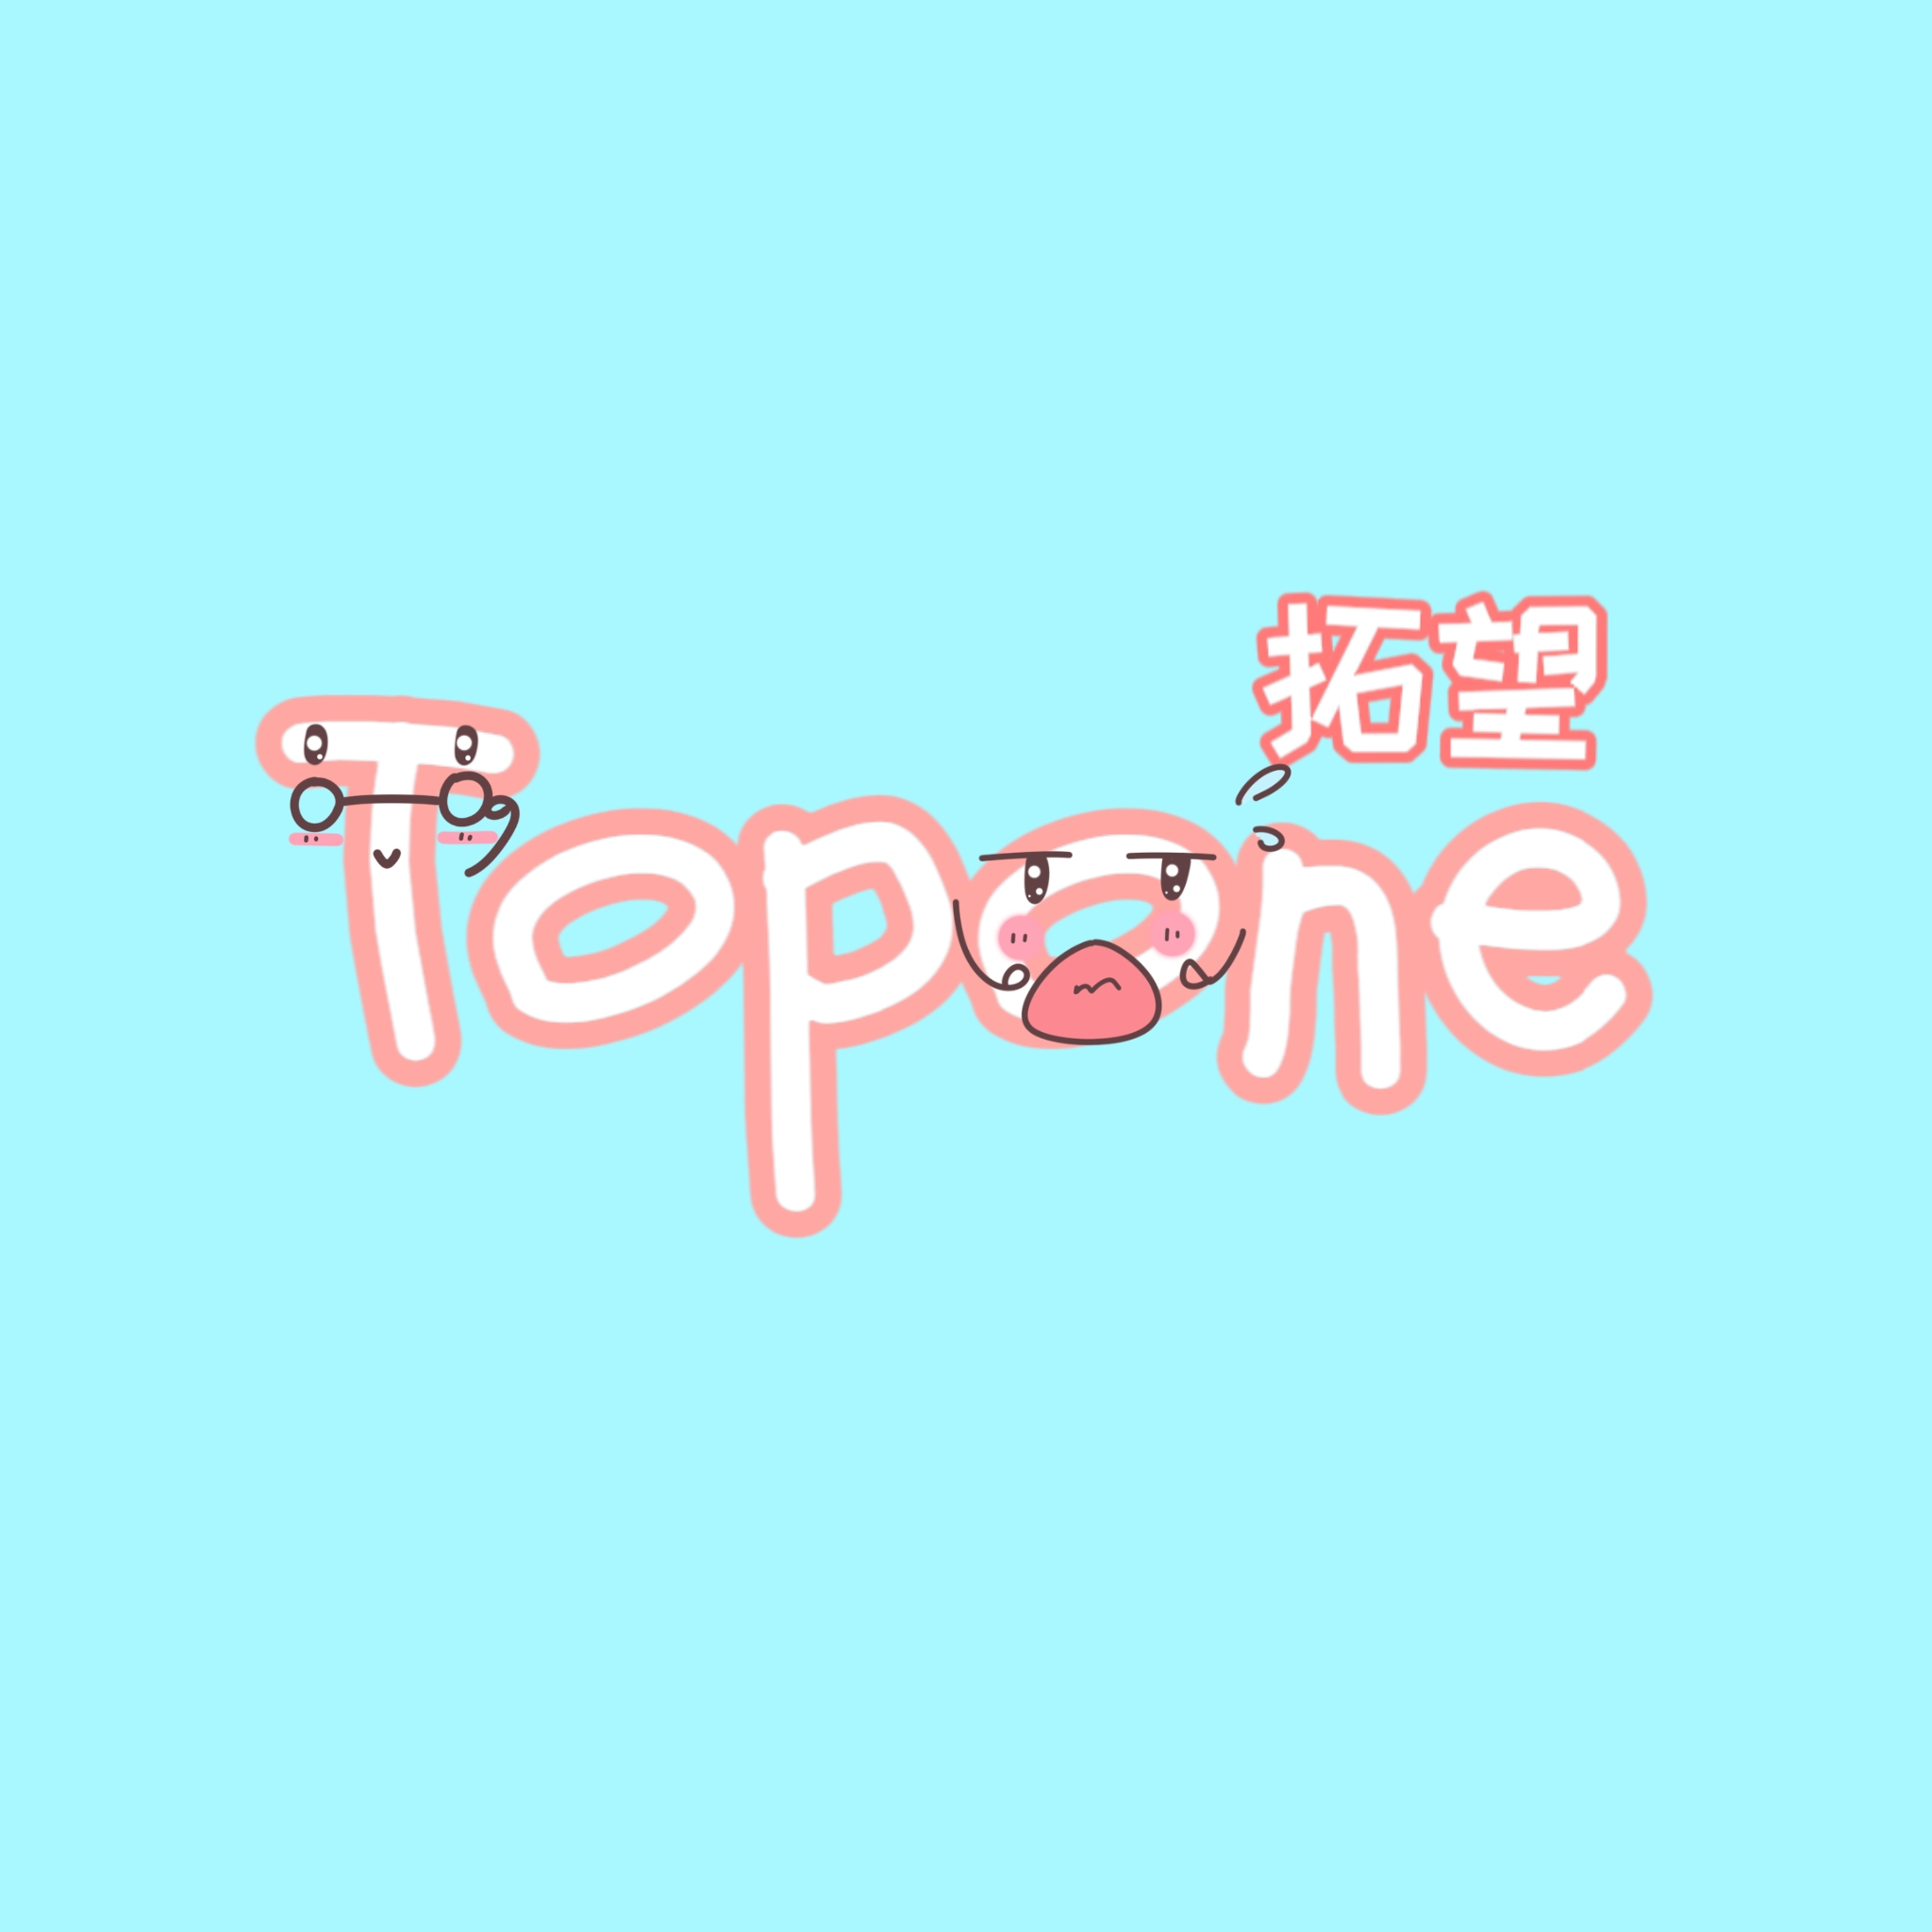 Logo -ul Topone